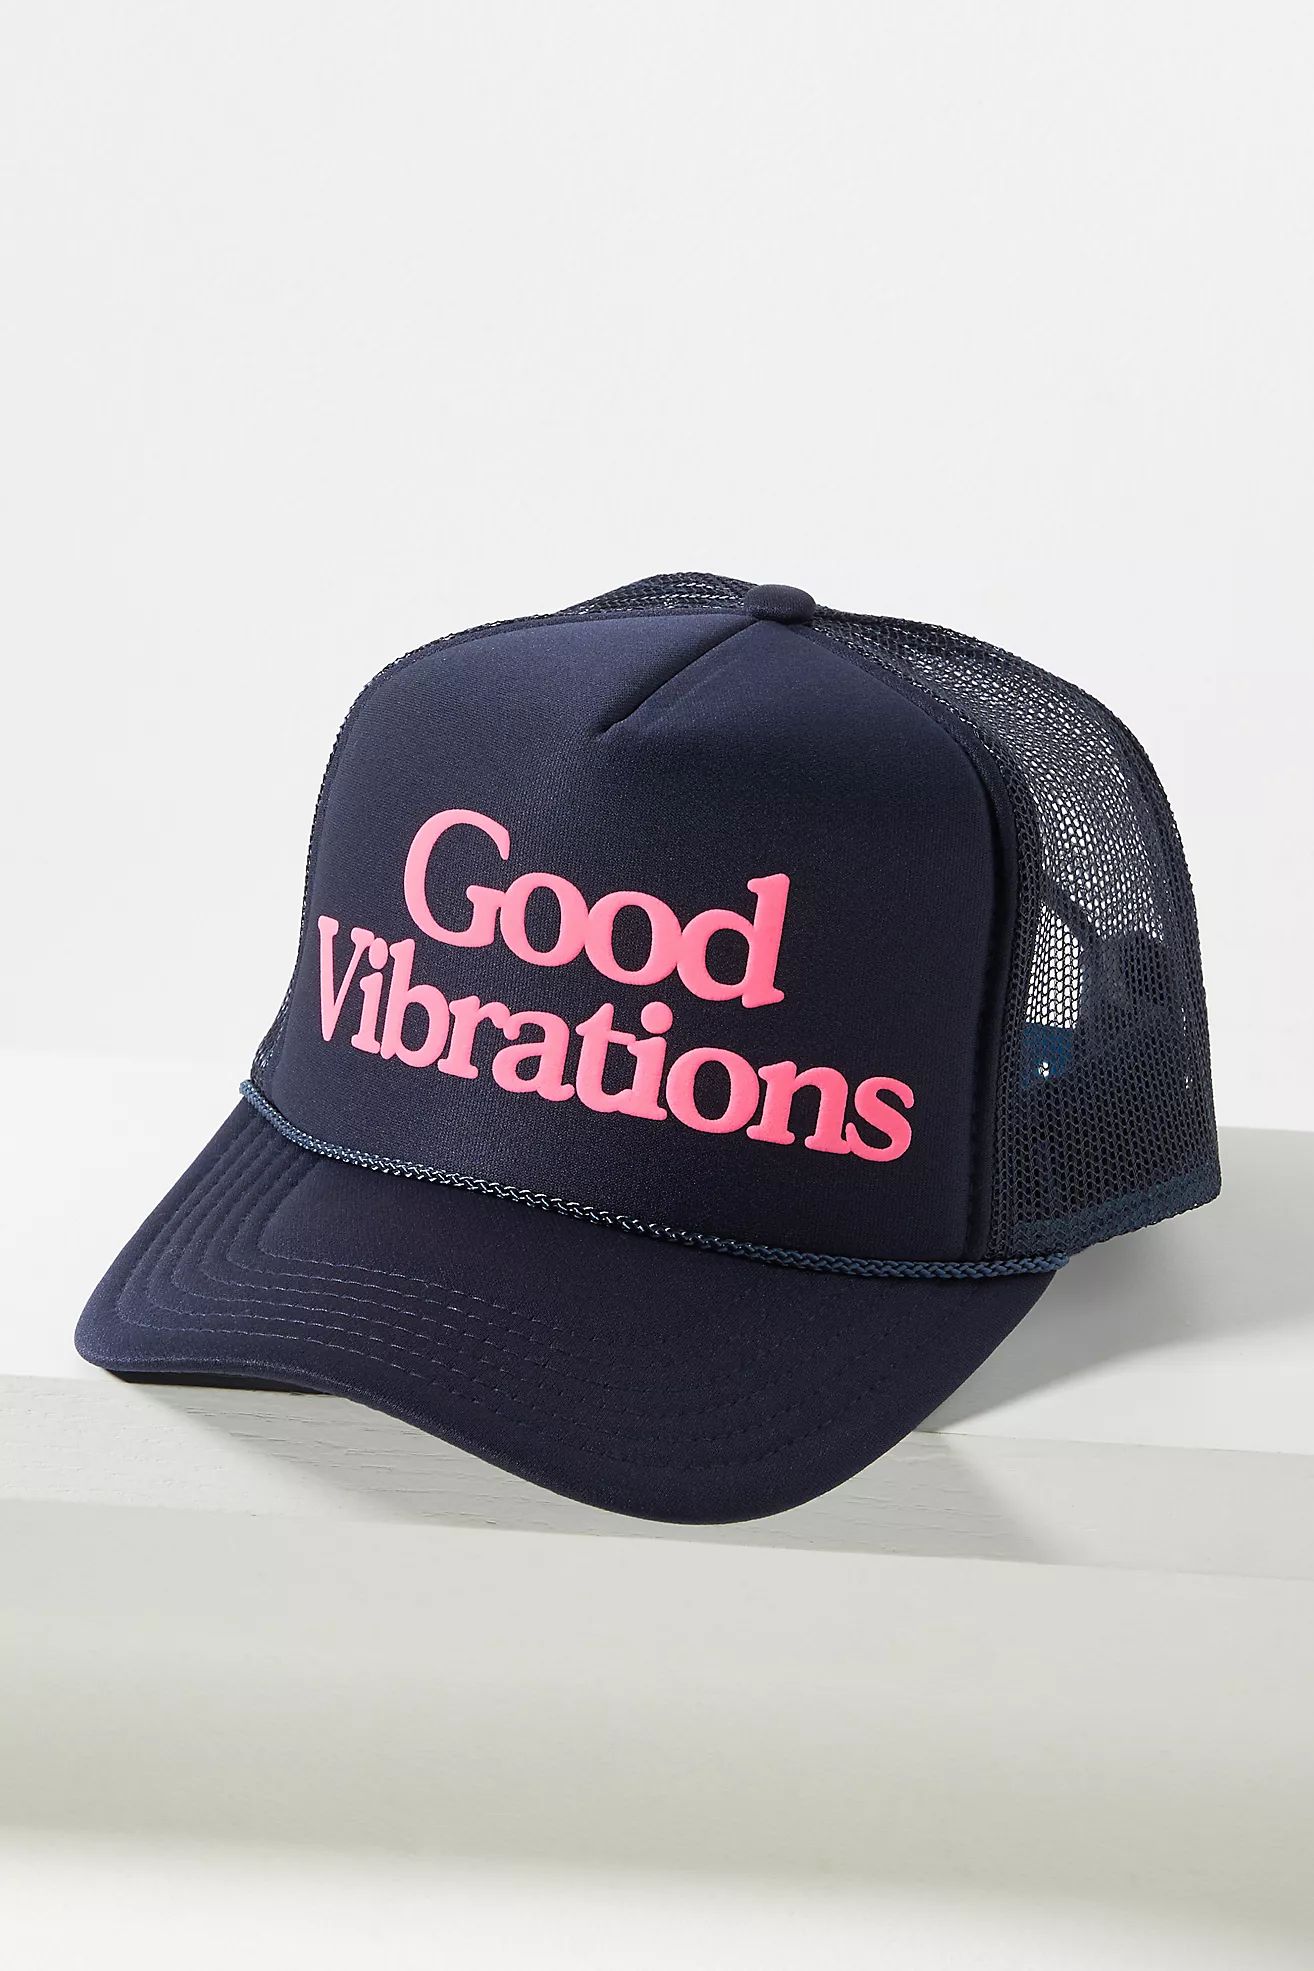 Ascot + Hart Good Vibrations Trucker Hat | Anthropologie (US)